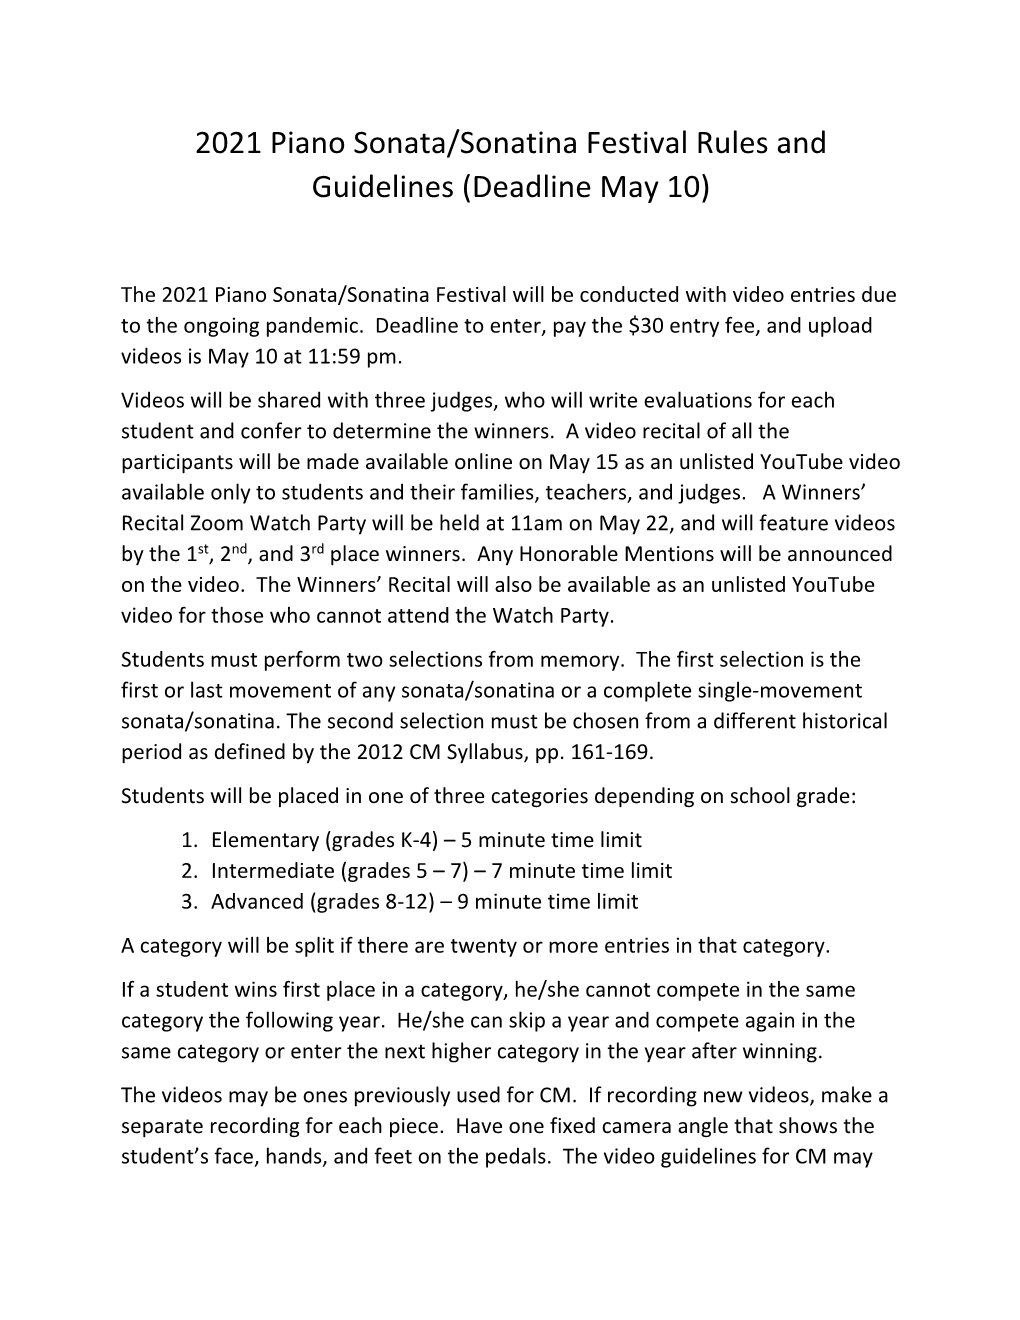 2021 Piano Sonata/Sonatina Festival Rules and Guidelines (Deadline May 10)